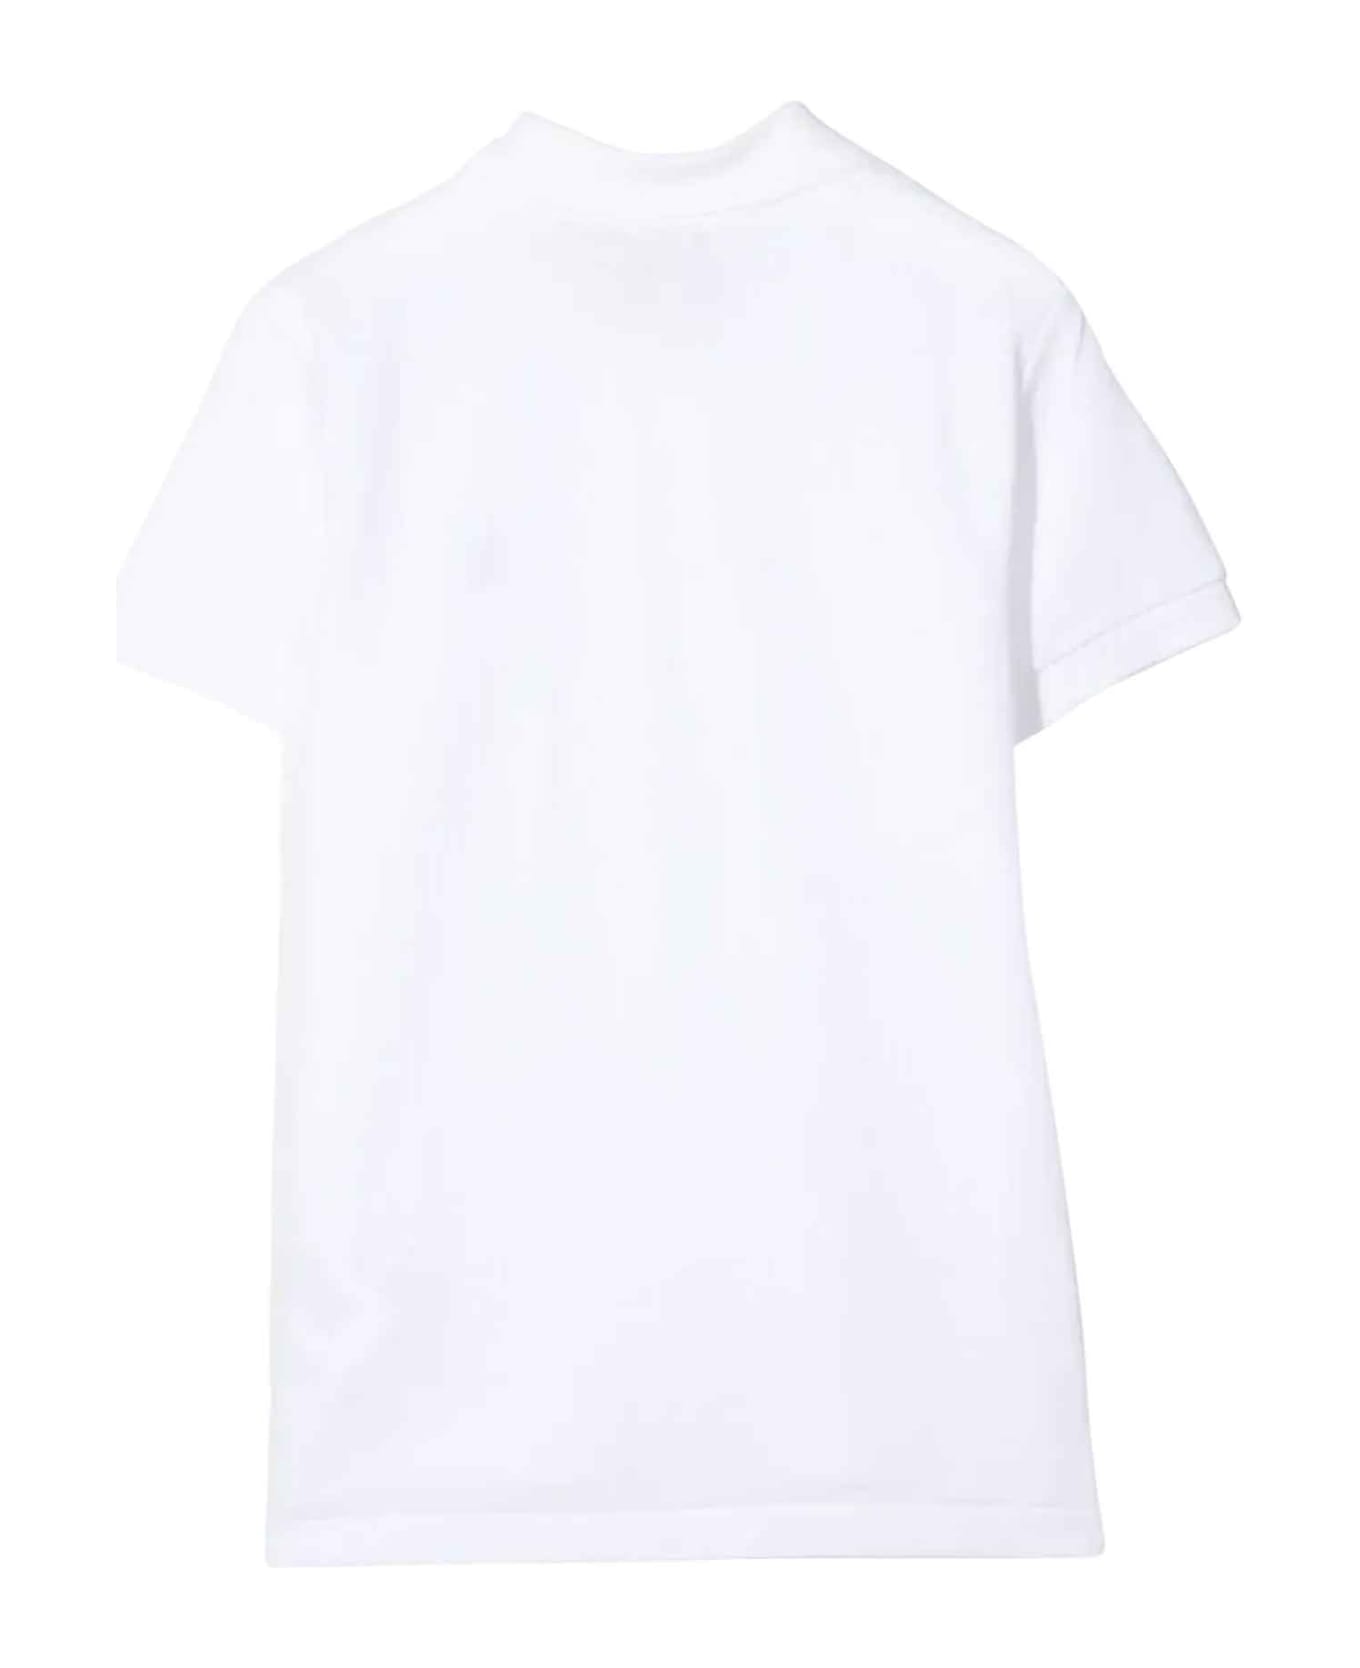 Ralph Lauren White Polo Shirt Boy - WHITE